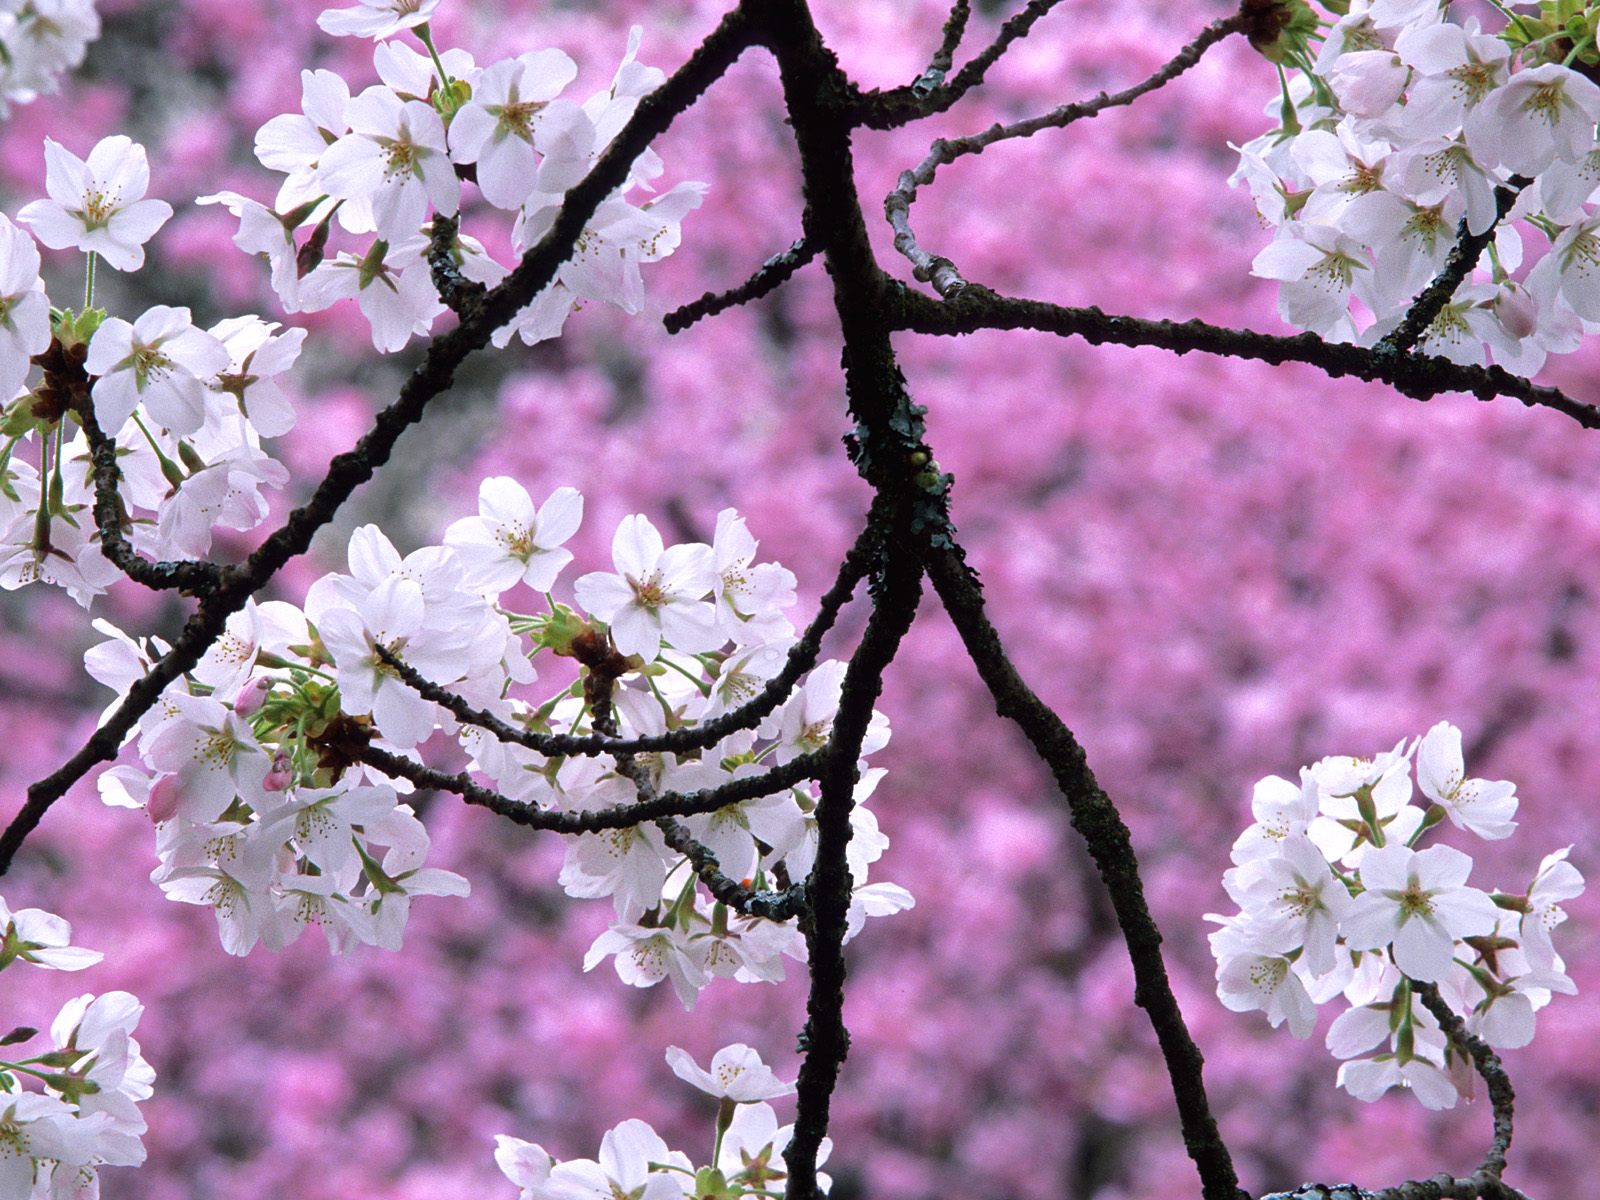 cherry blossom wallpaper desktopCherry blossom wallpaper hdcherry